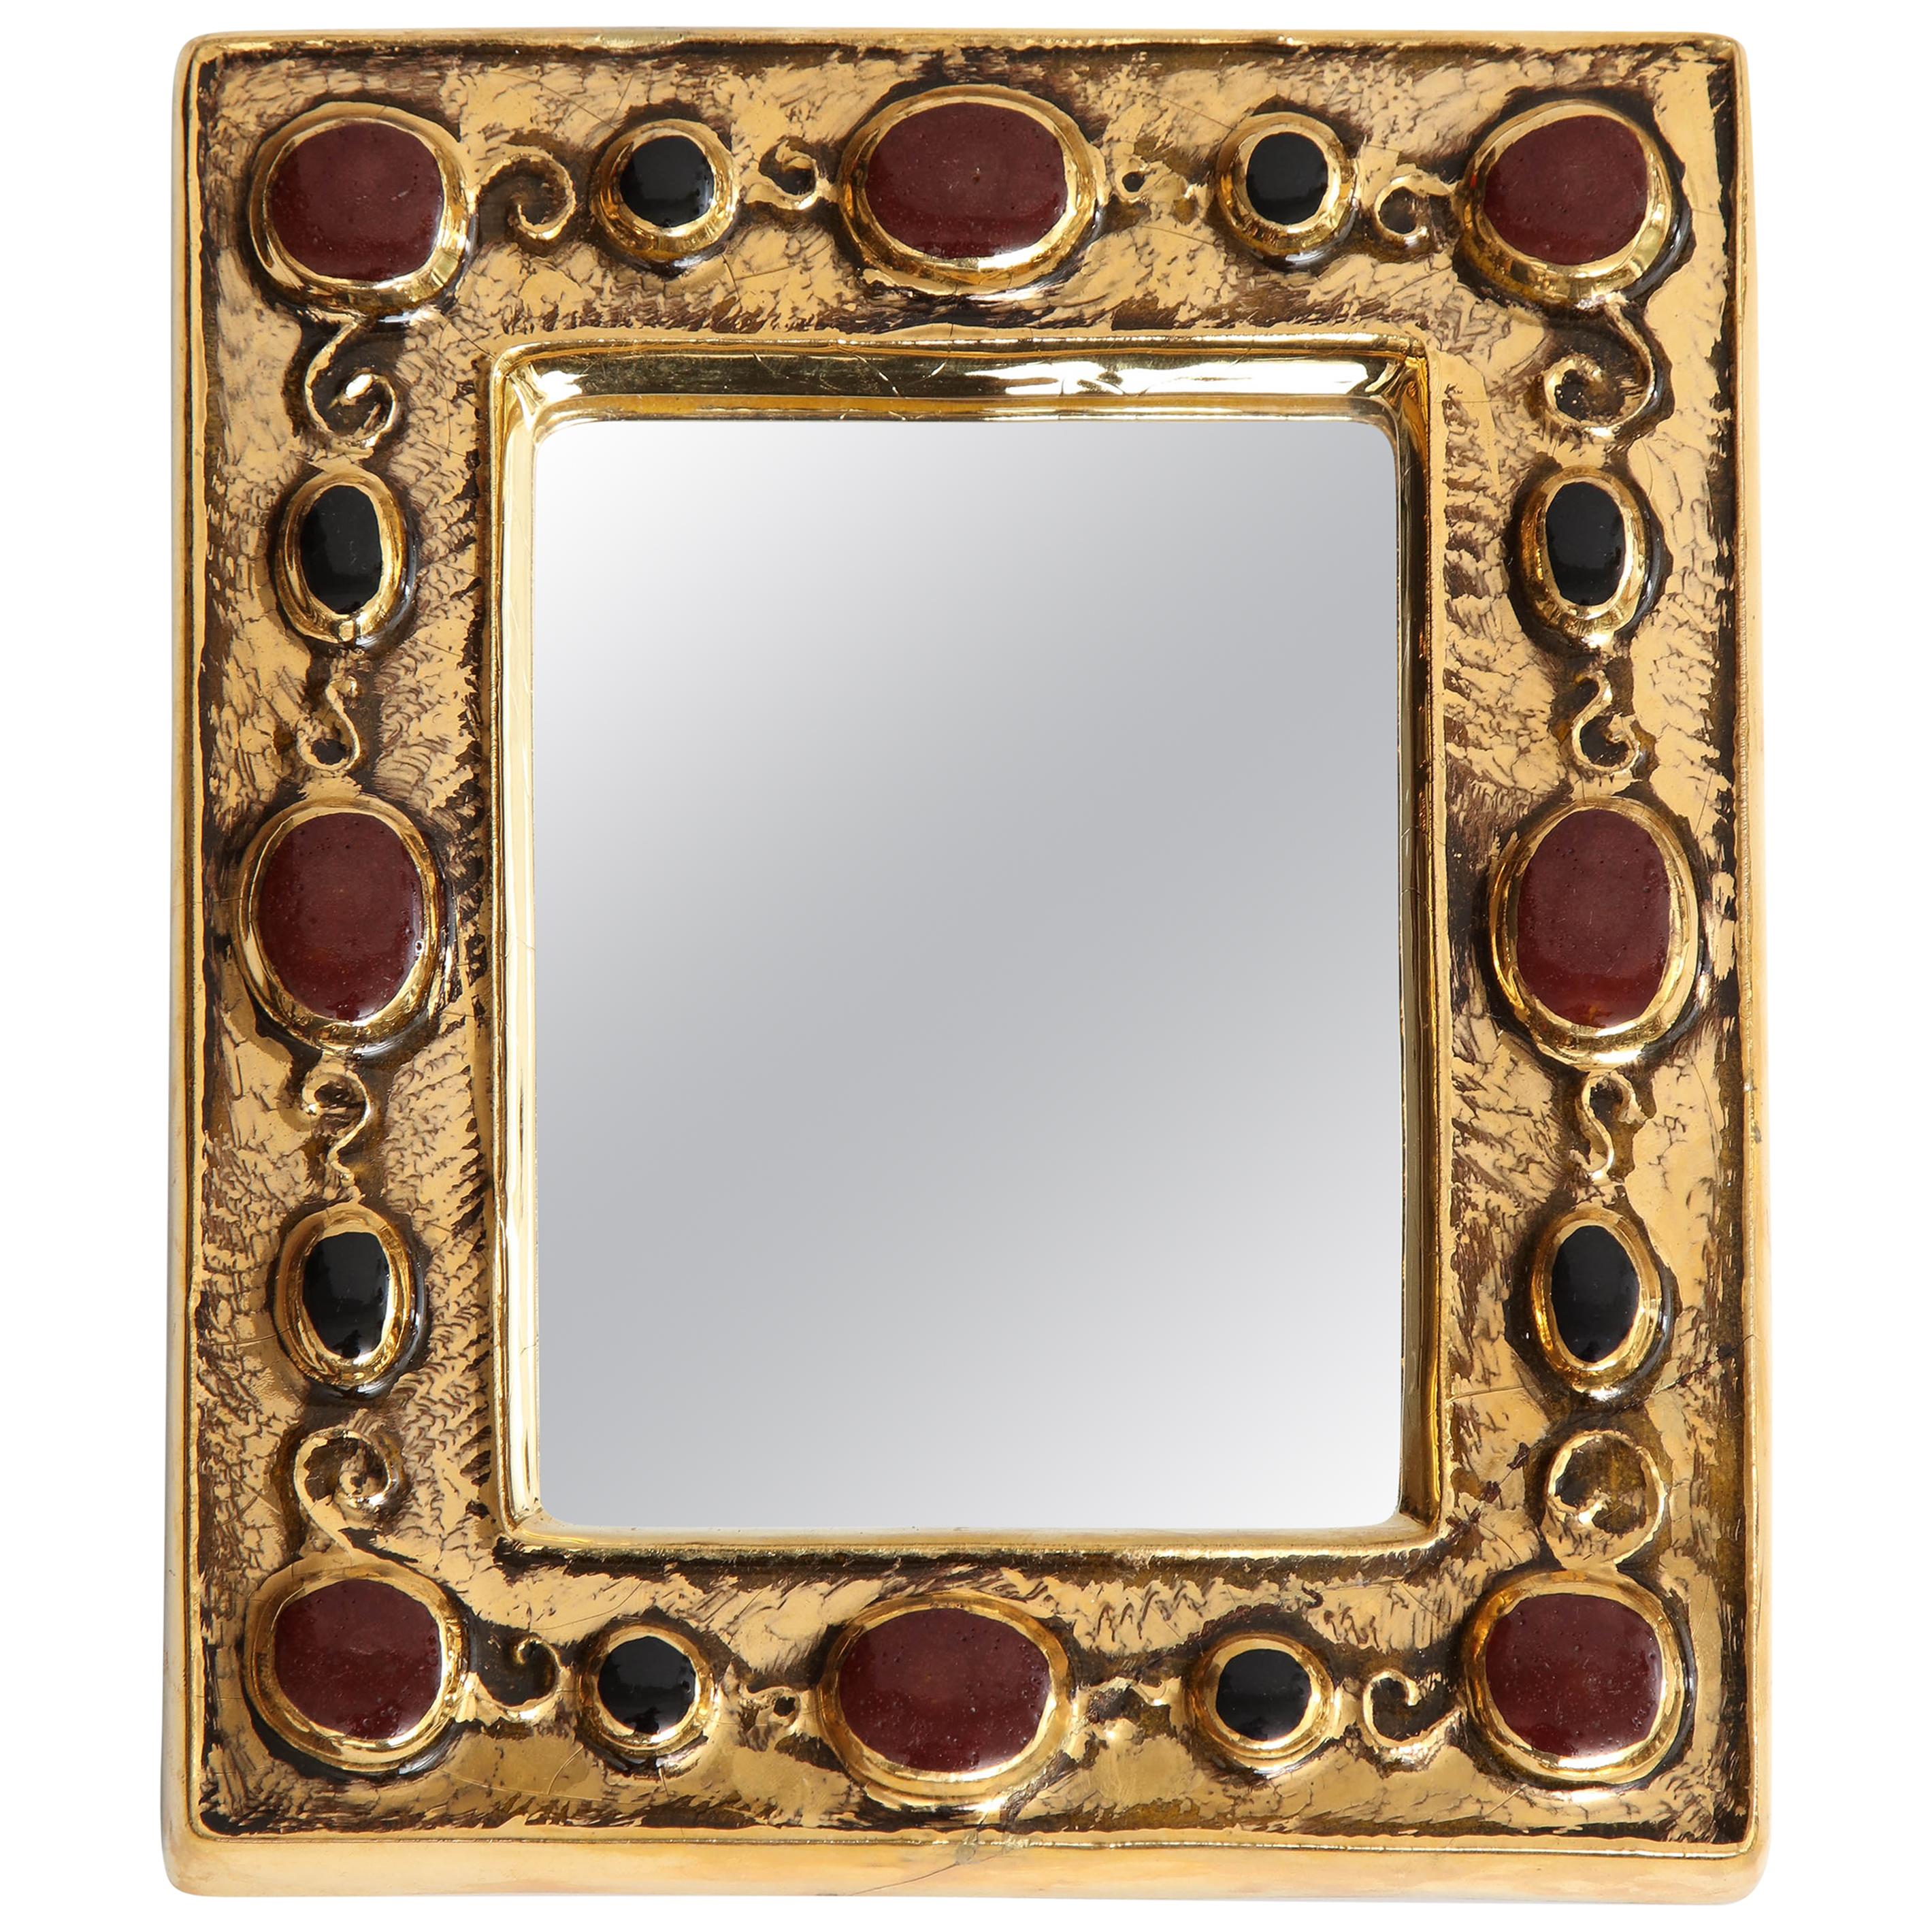 Franois Lembo-Spiegel mit Juwelenbesatz